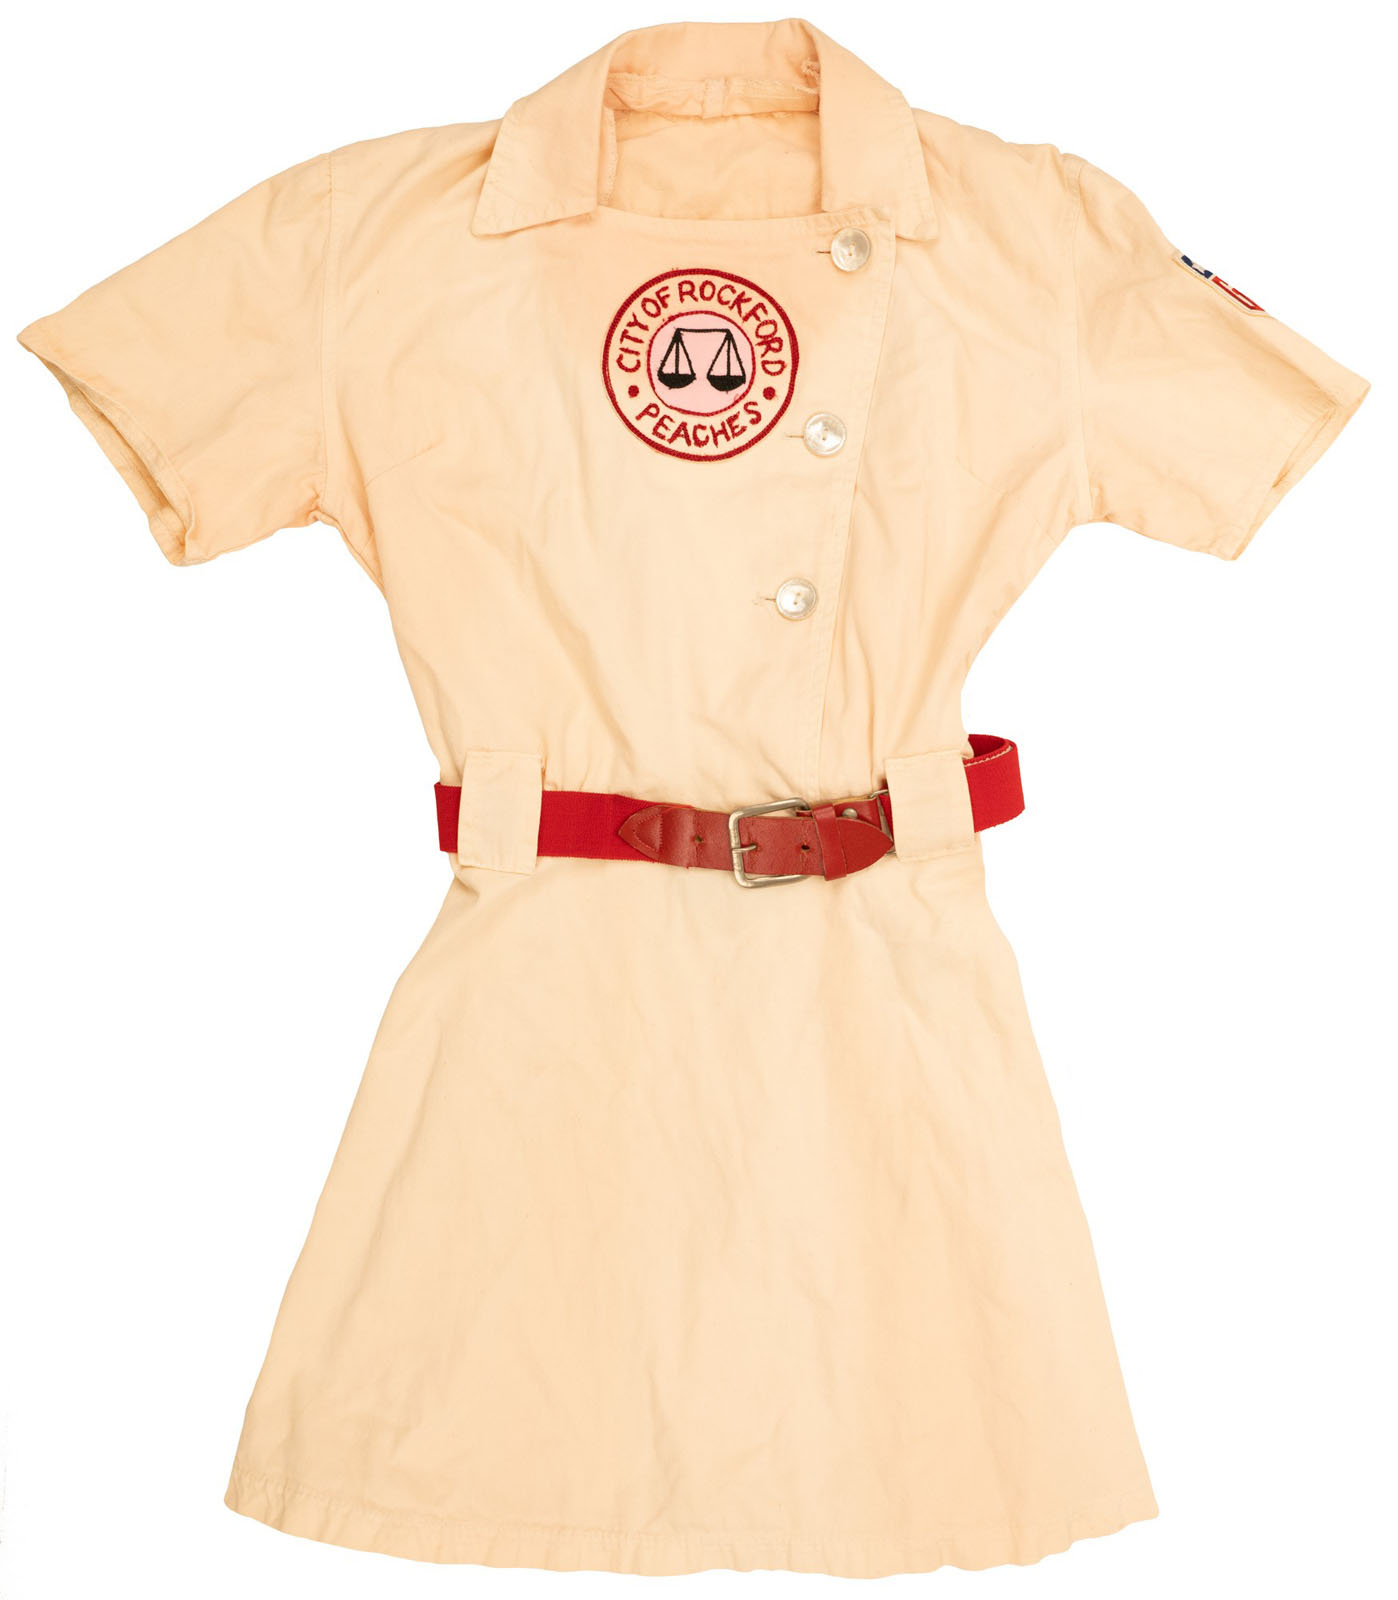 Marla Hooch Rockford Peaches Adult Costume